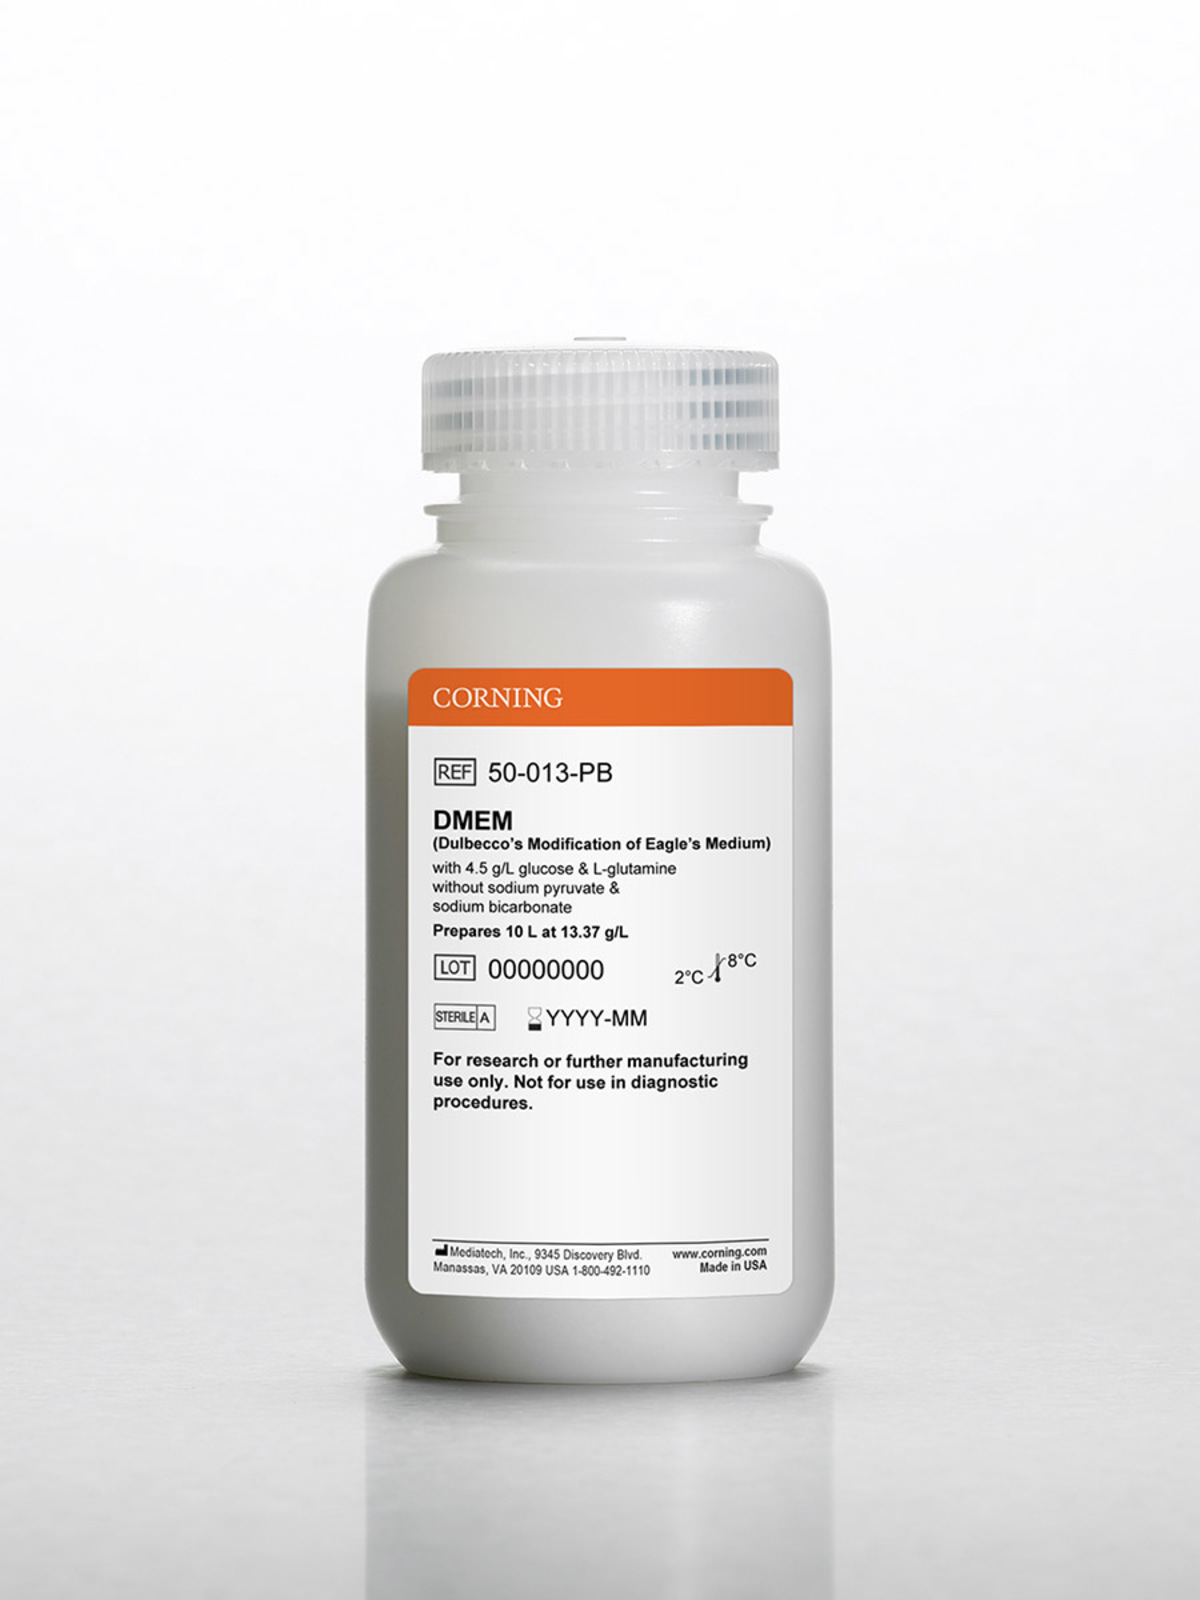 10 L DMEM (Dulbecco's Modification of Eagle's Medium), Powder with 4.5 g/L glucose and L-glutamine, 